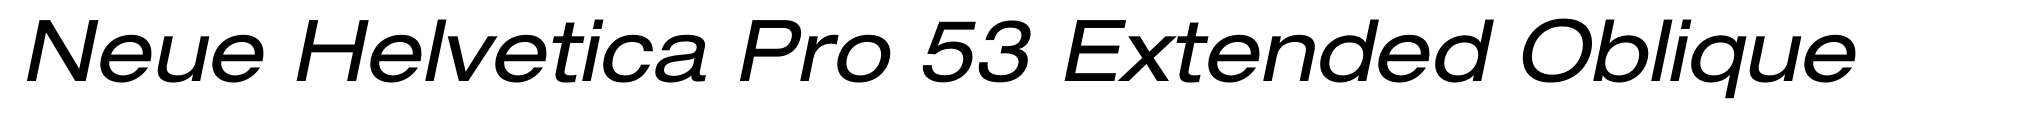 Neue Helvetica Pro 53 Extended Oblique image